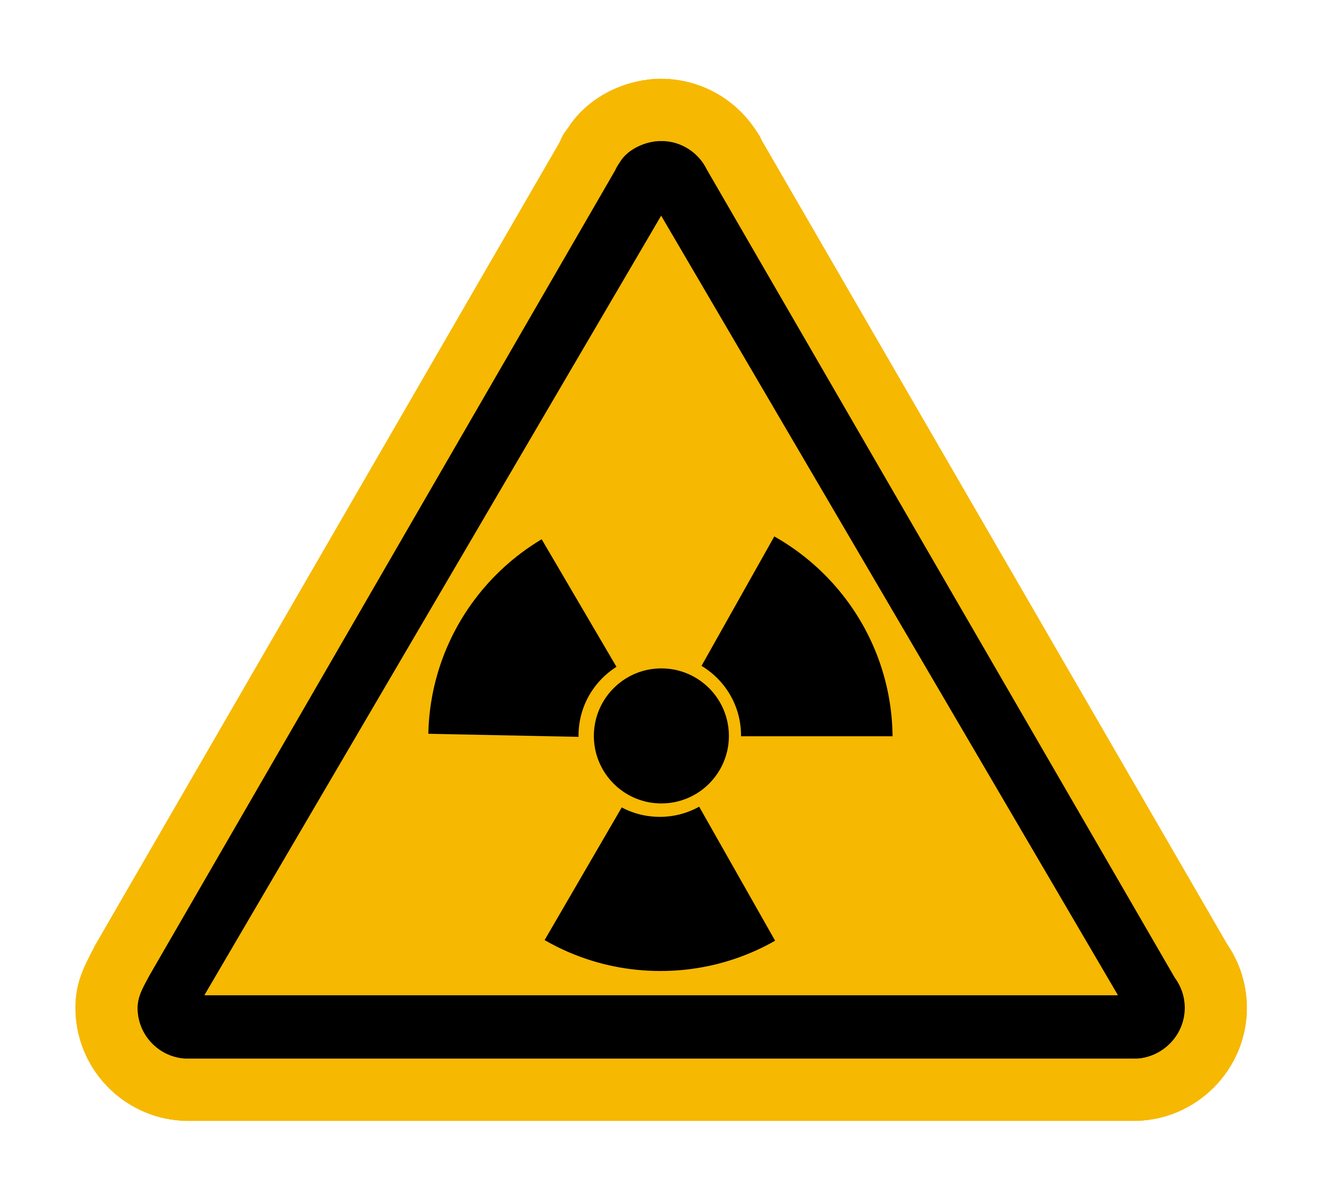 an illustration of a triangular radioactive warning sign